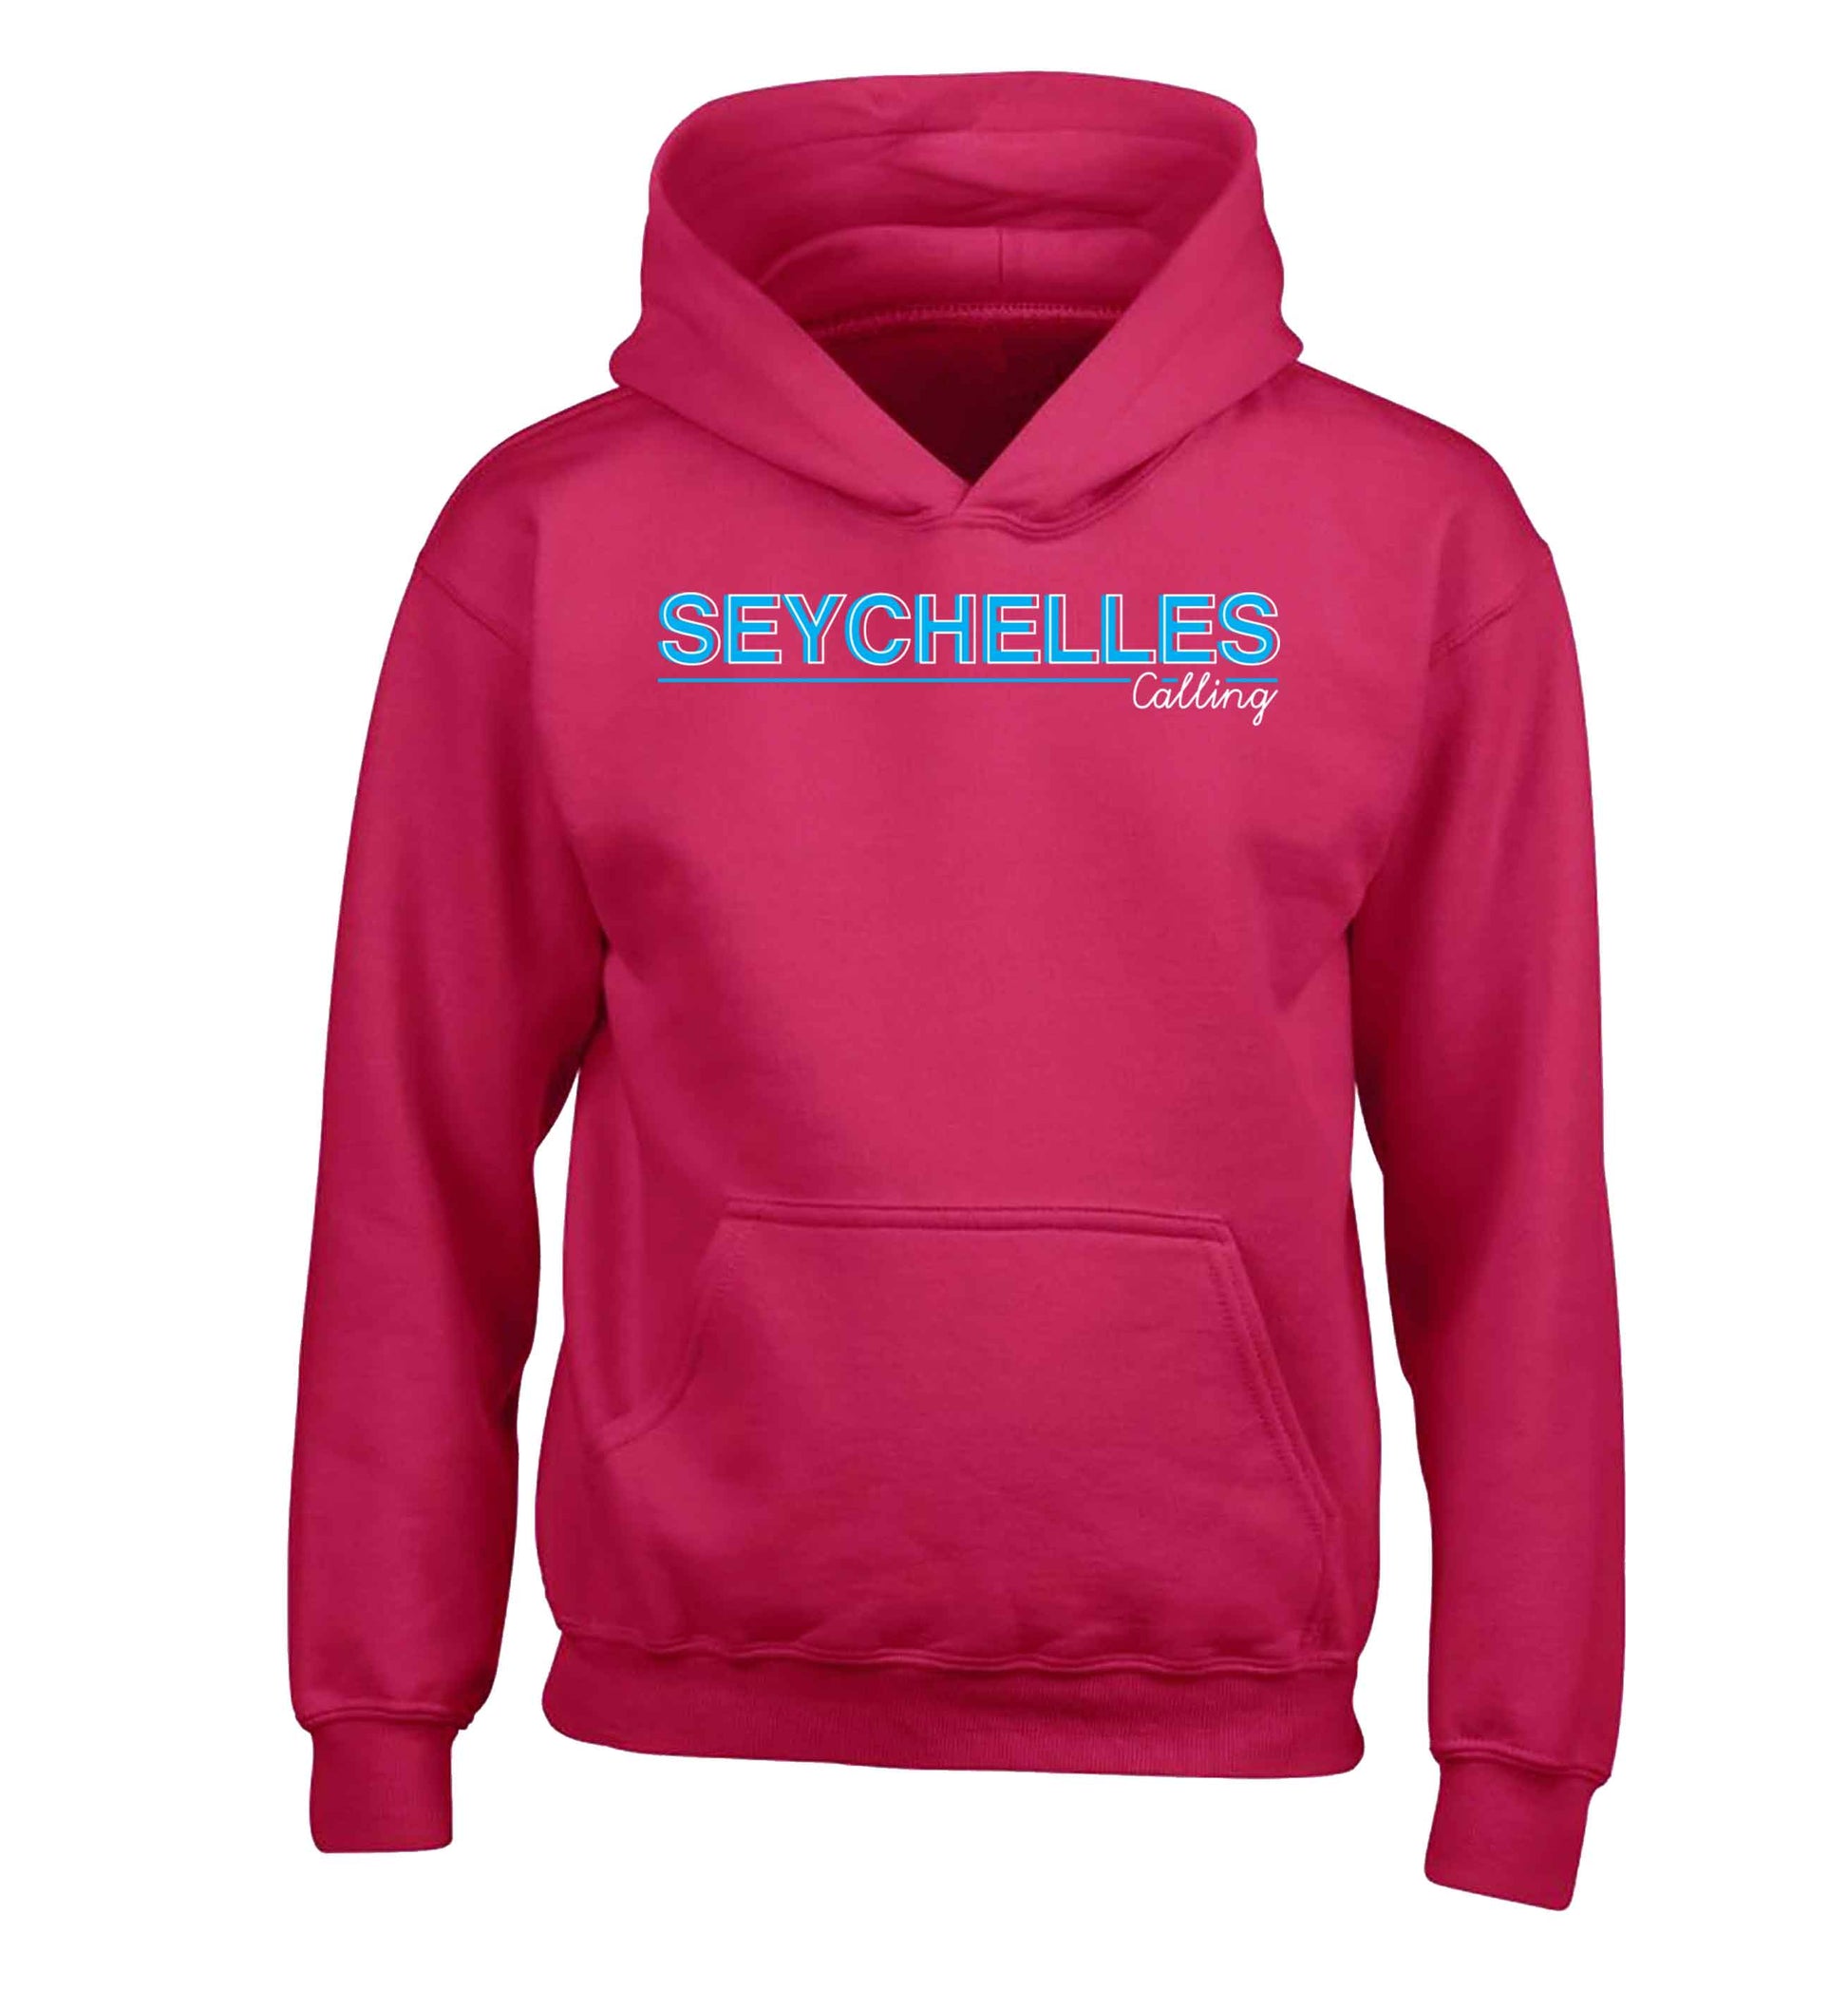 Seychelles calling children's pink hoodie 12-13 Years